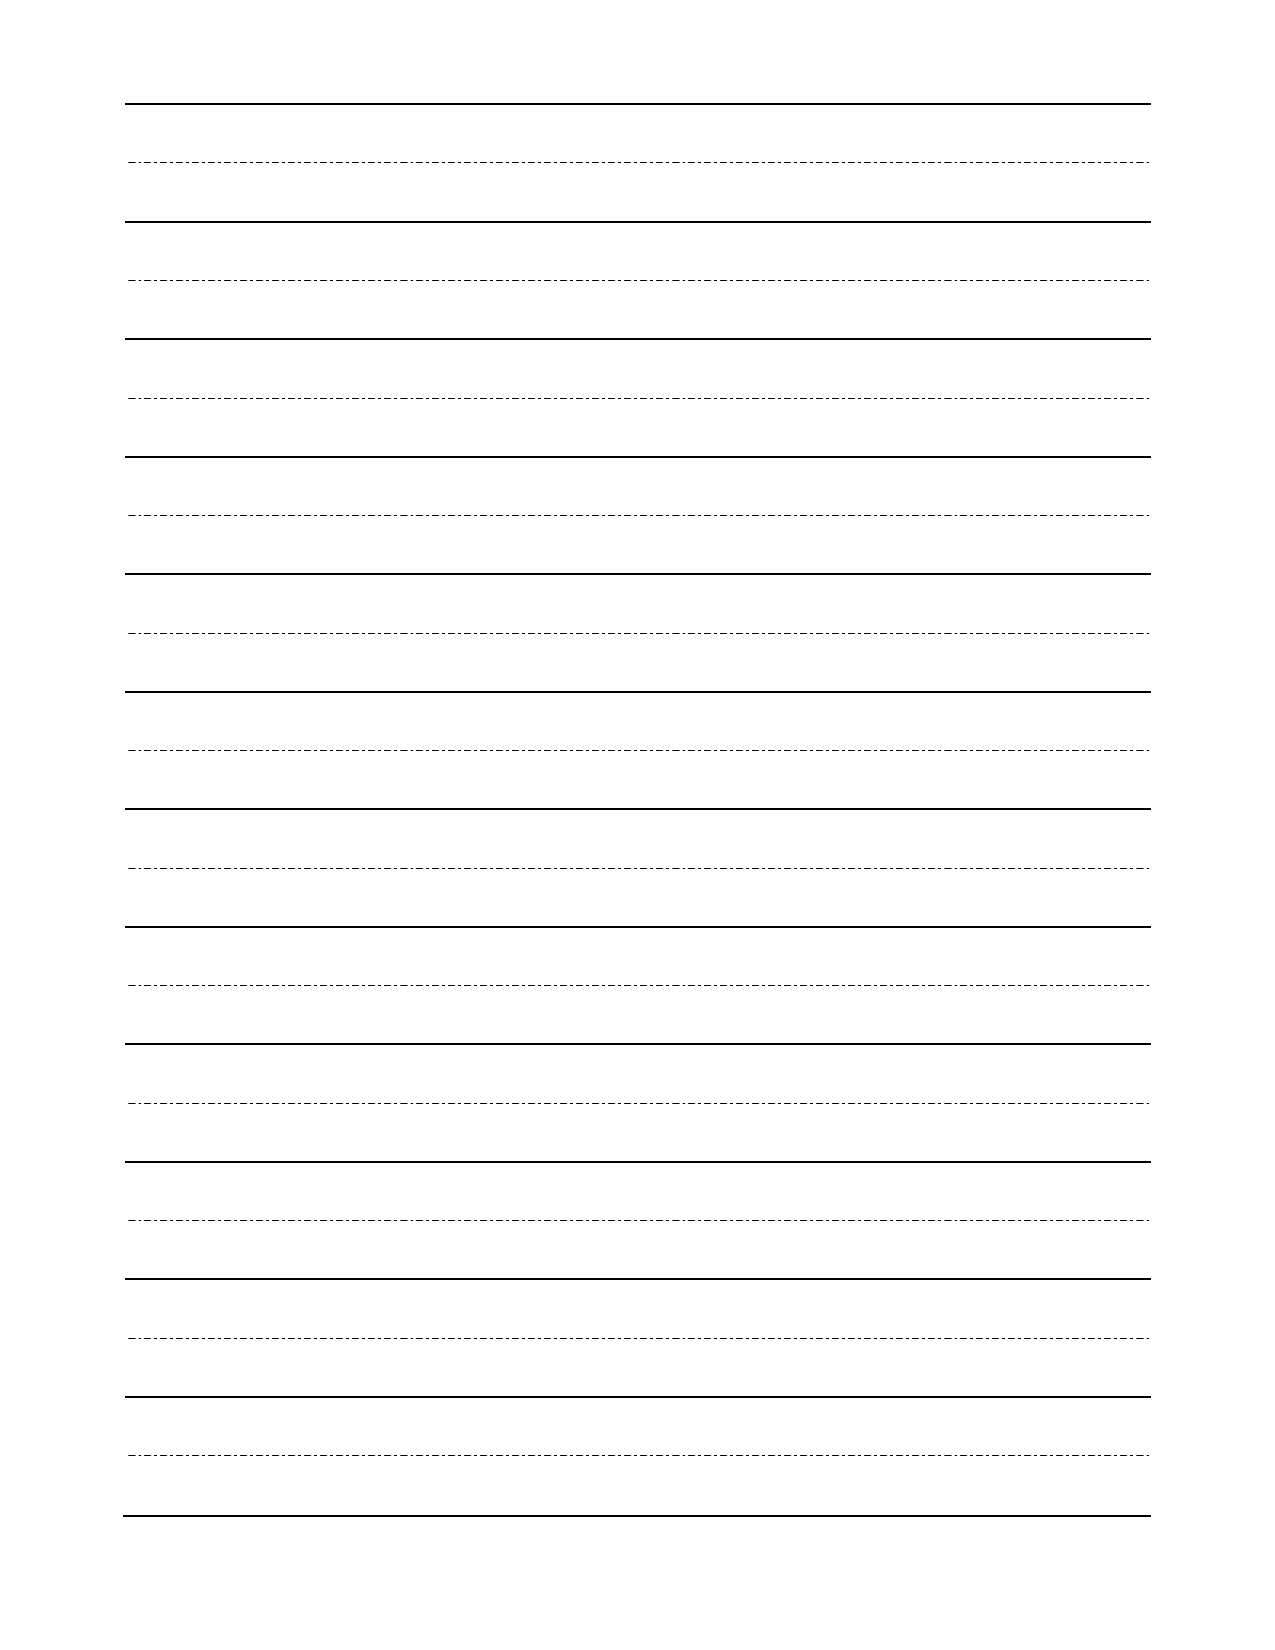 Free Printable Blank Practice Writing Sheets